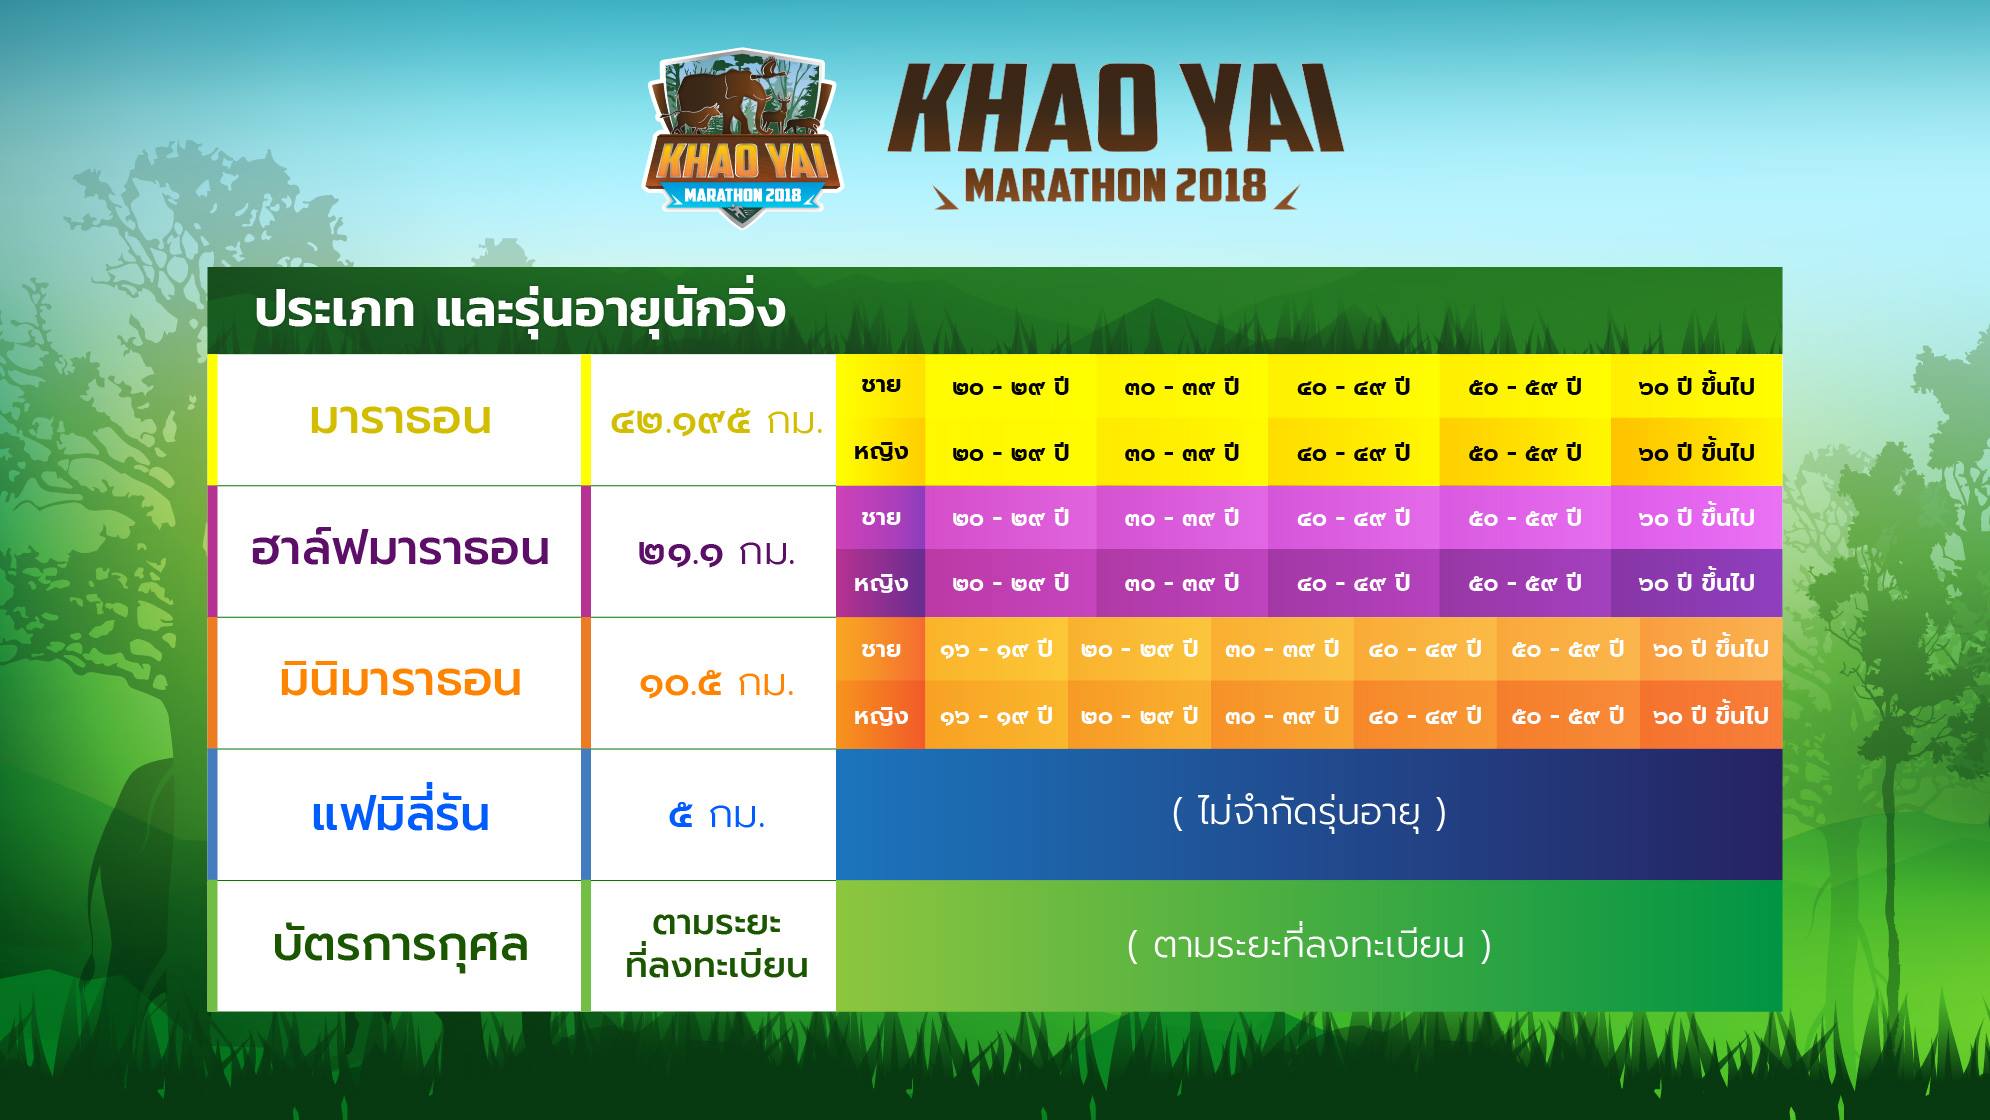 Khao Yai Marathon 2018 วิ่งชิงถ้วยพระราชทาน 3 พระองค์